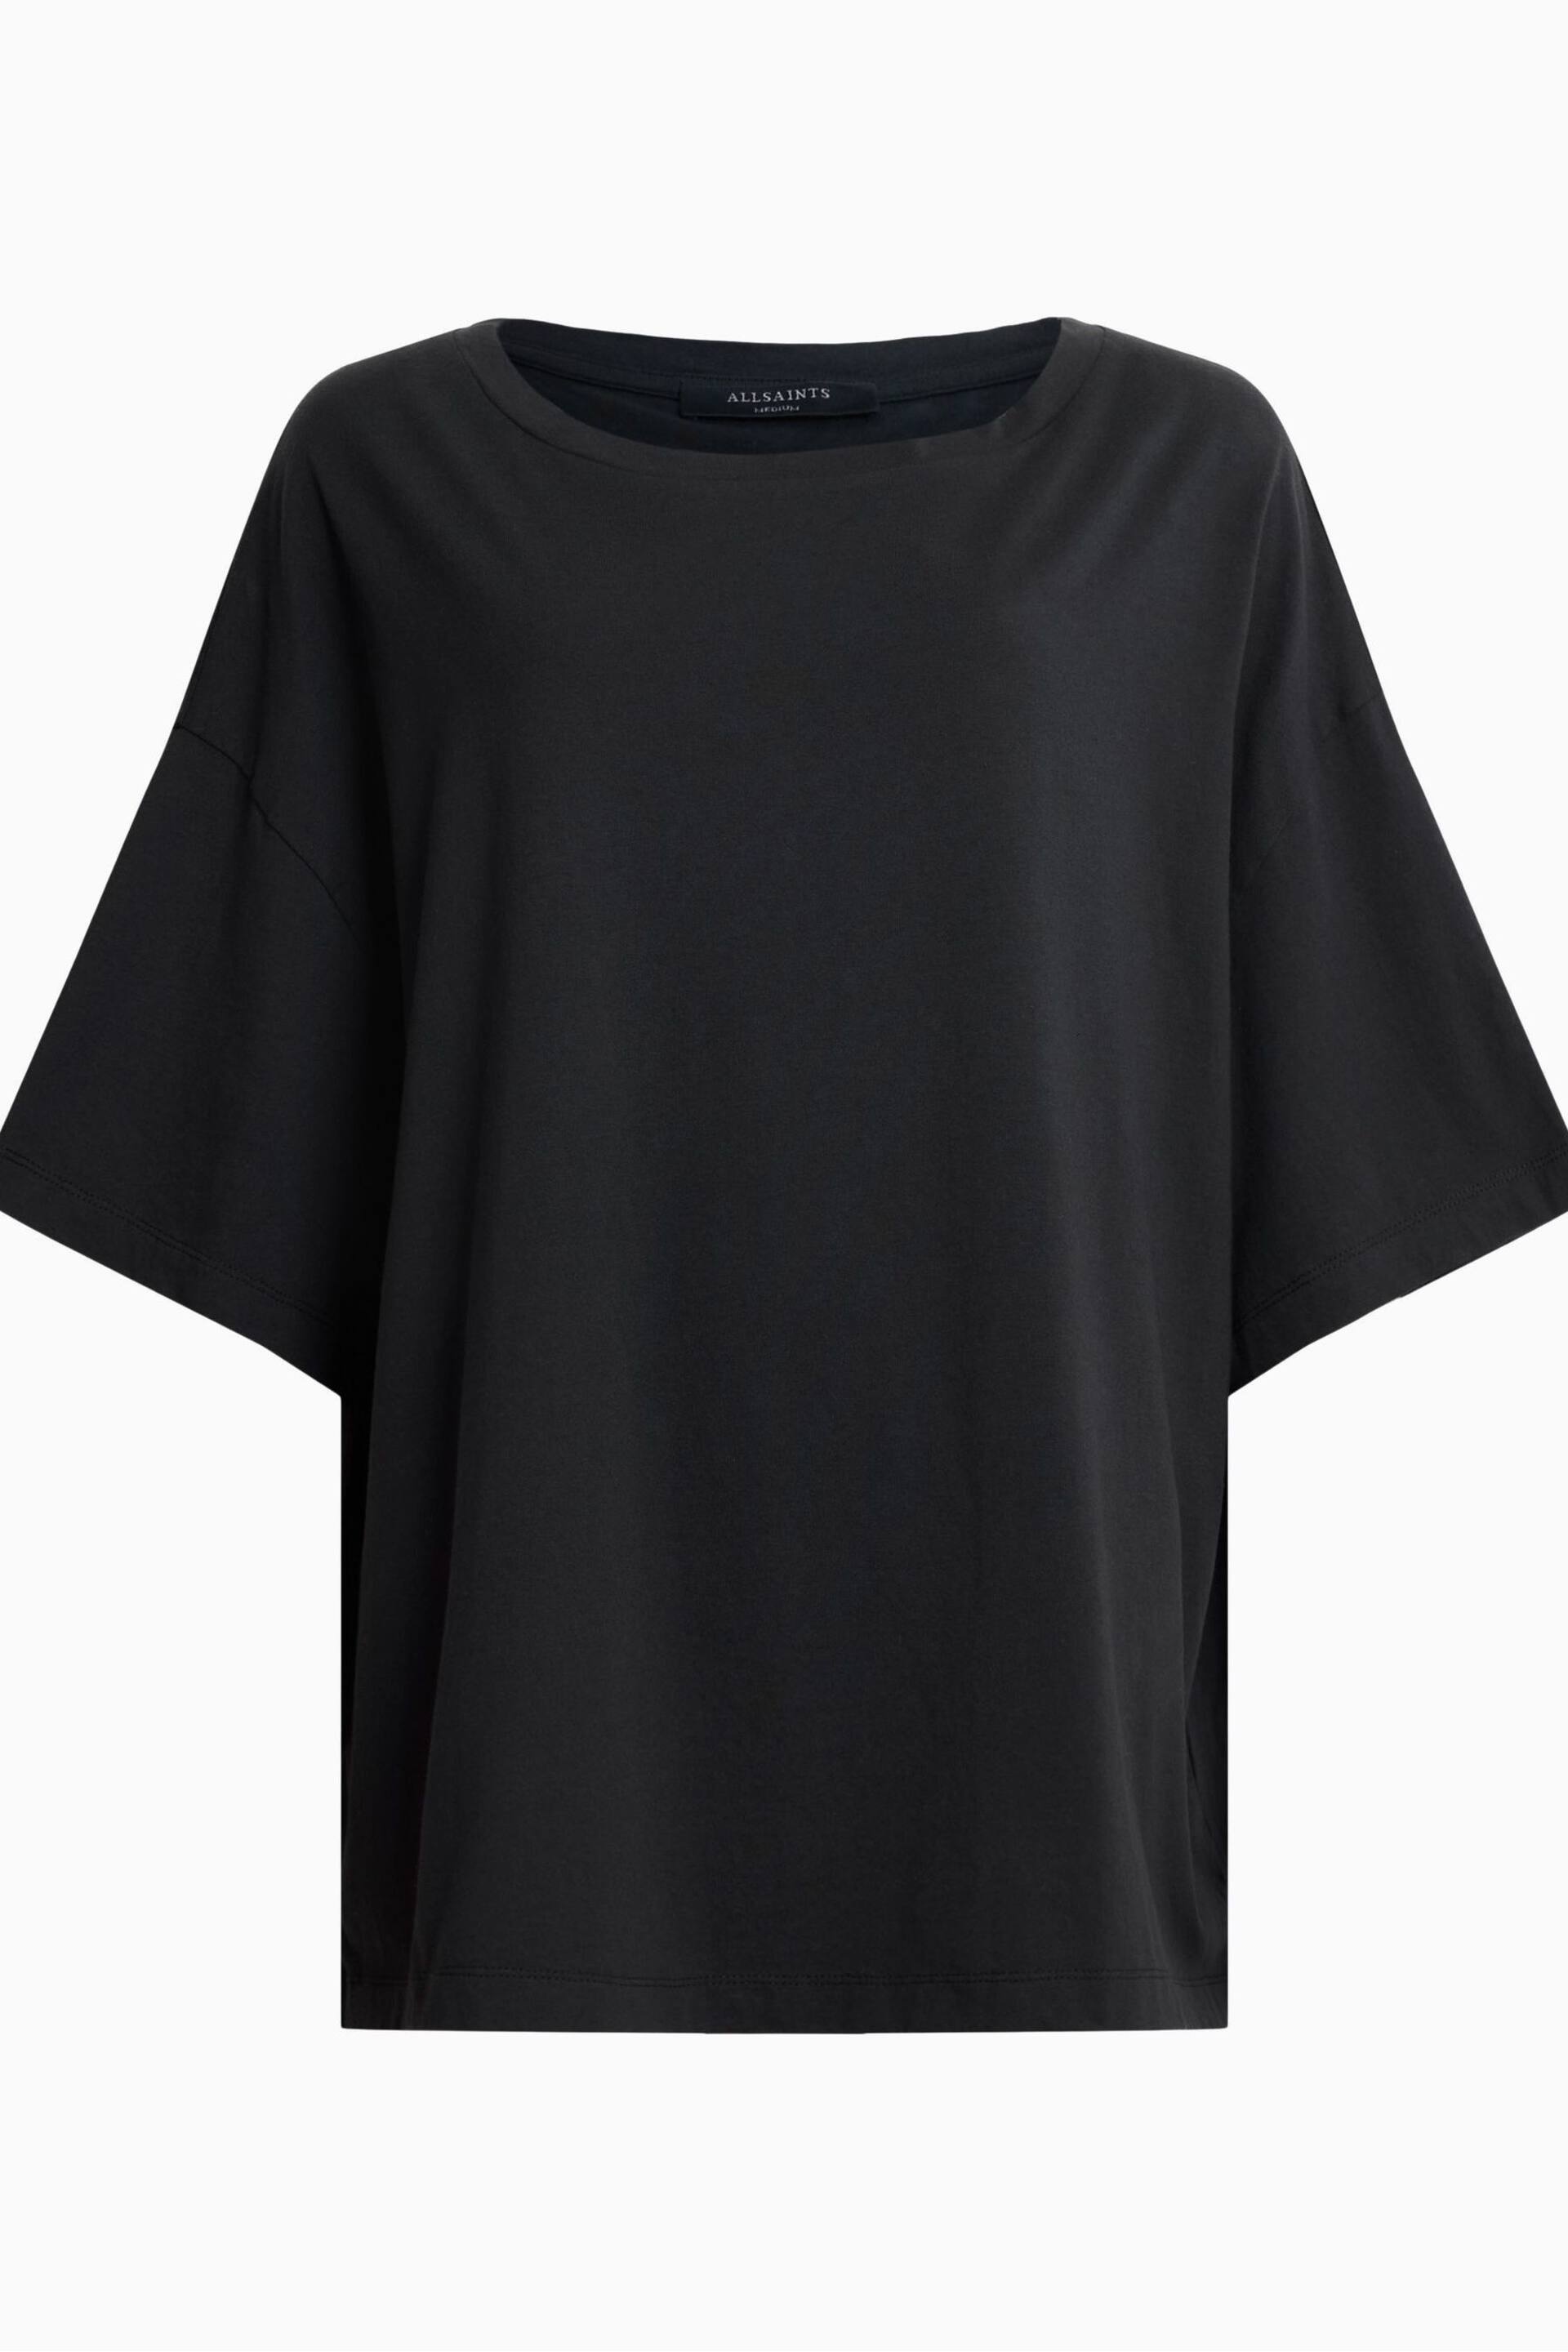 AllSaints Black Lydia T-Shirt - Image 7 of 7